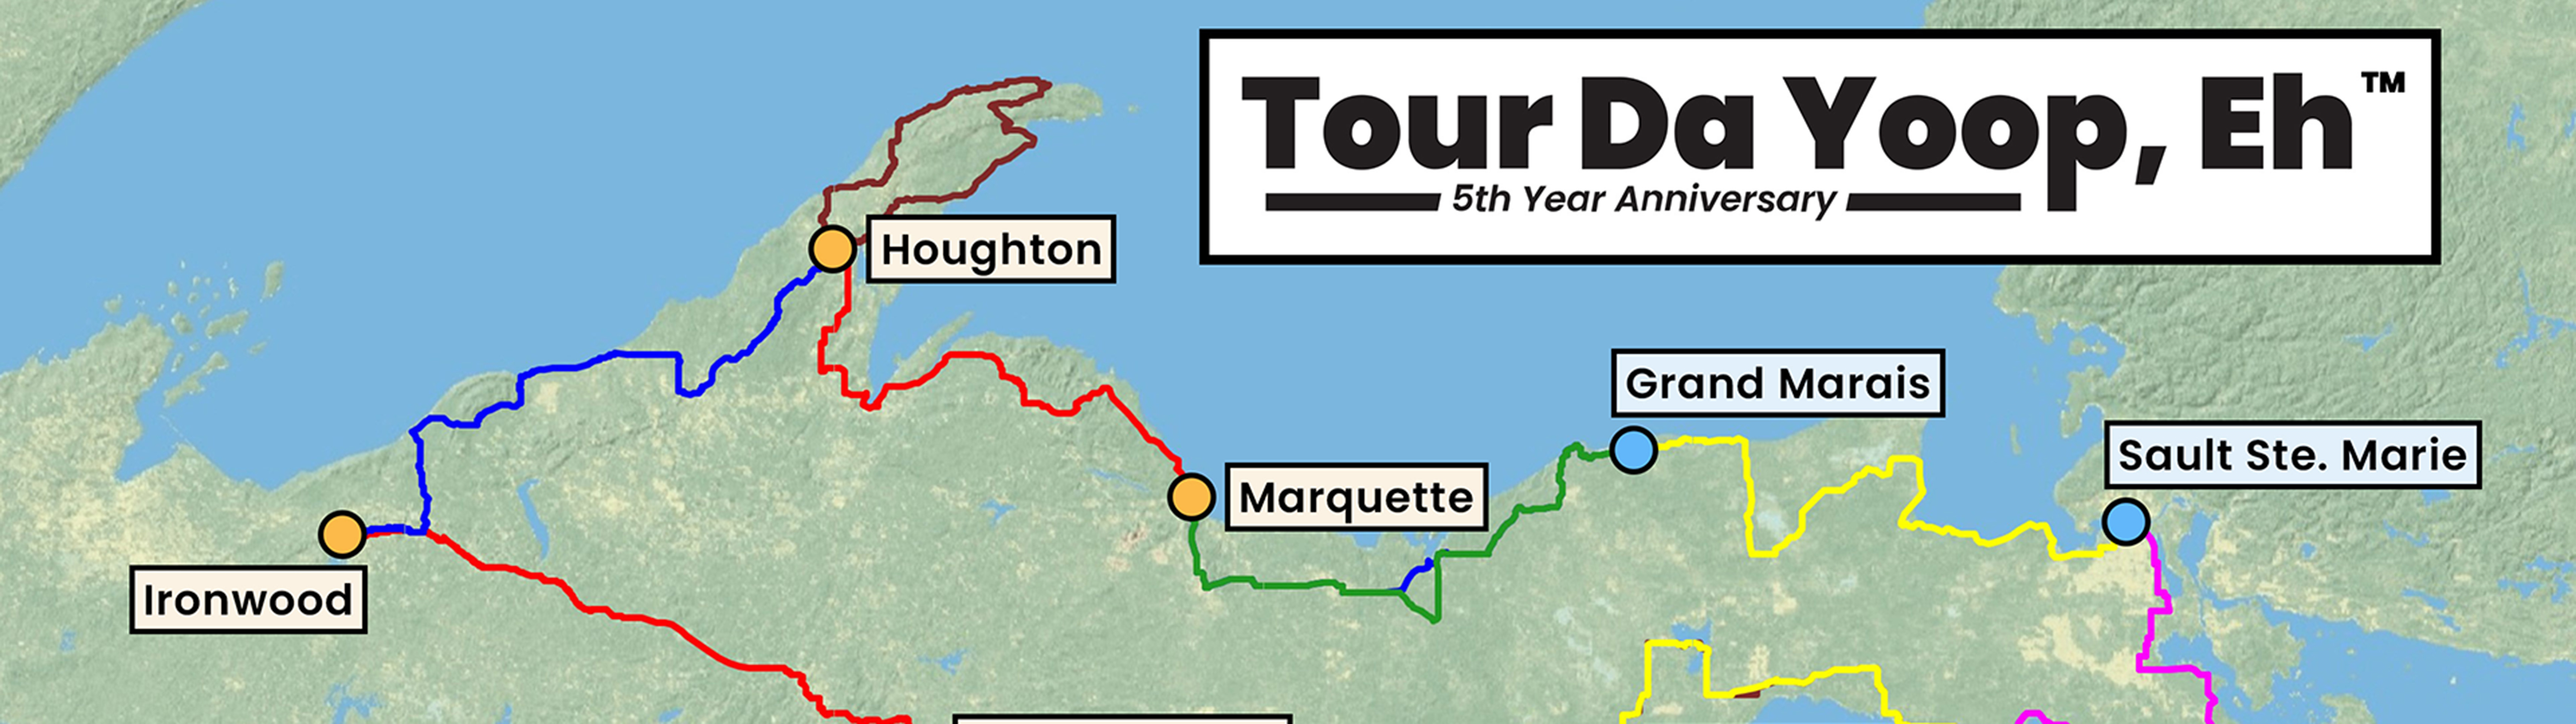 Map of Tour Da Yoop, Eh routes